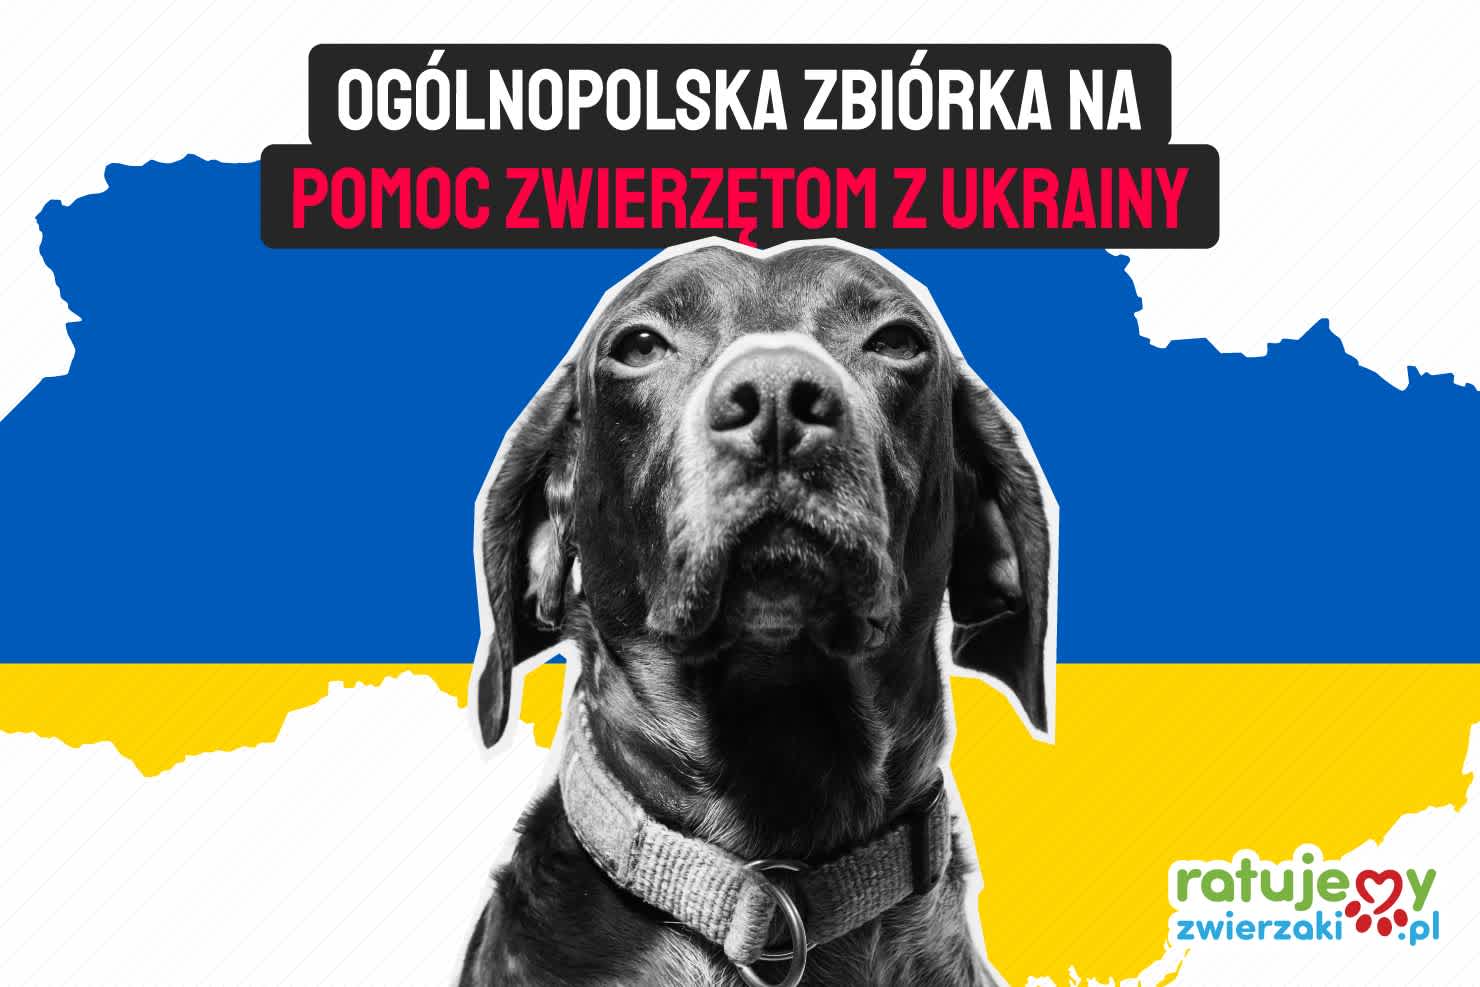 Supporting the animals of Ukraine